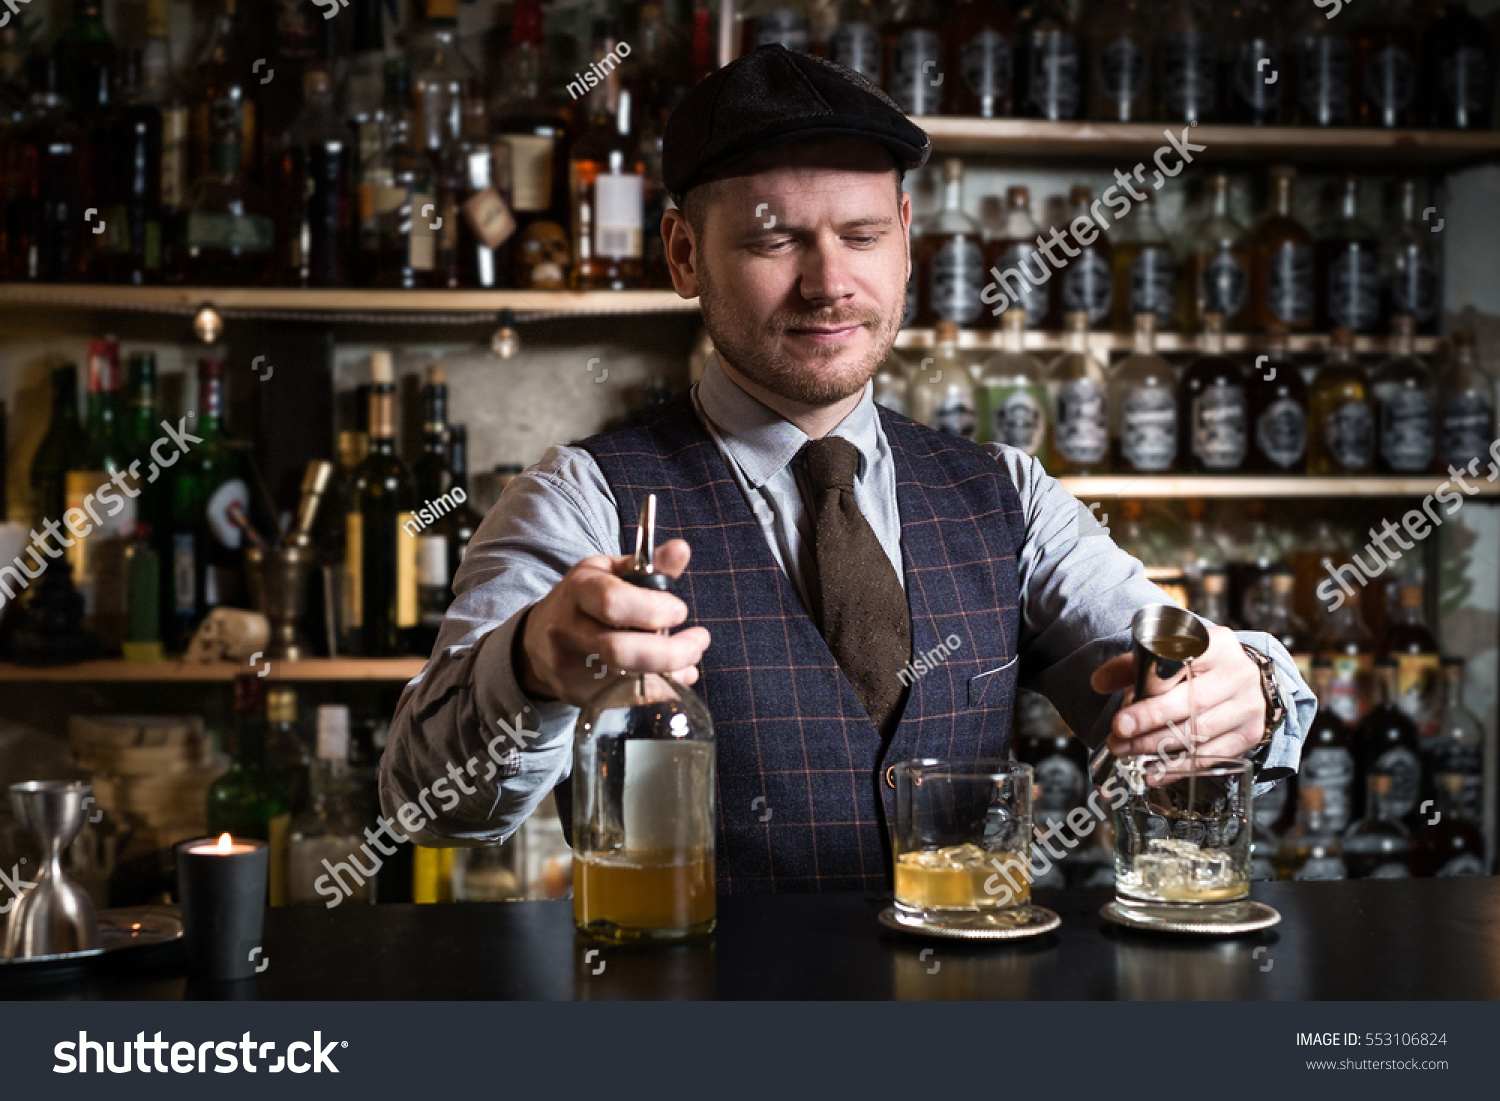 Bartender bartender is pouring a drink #553106824